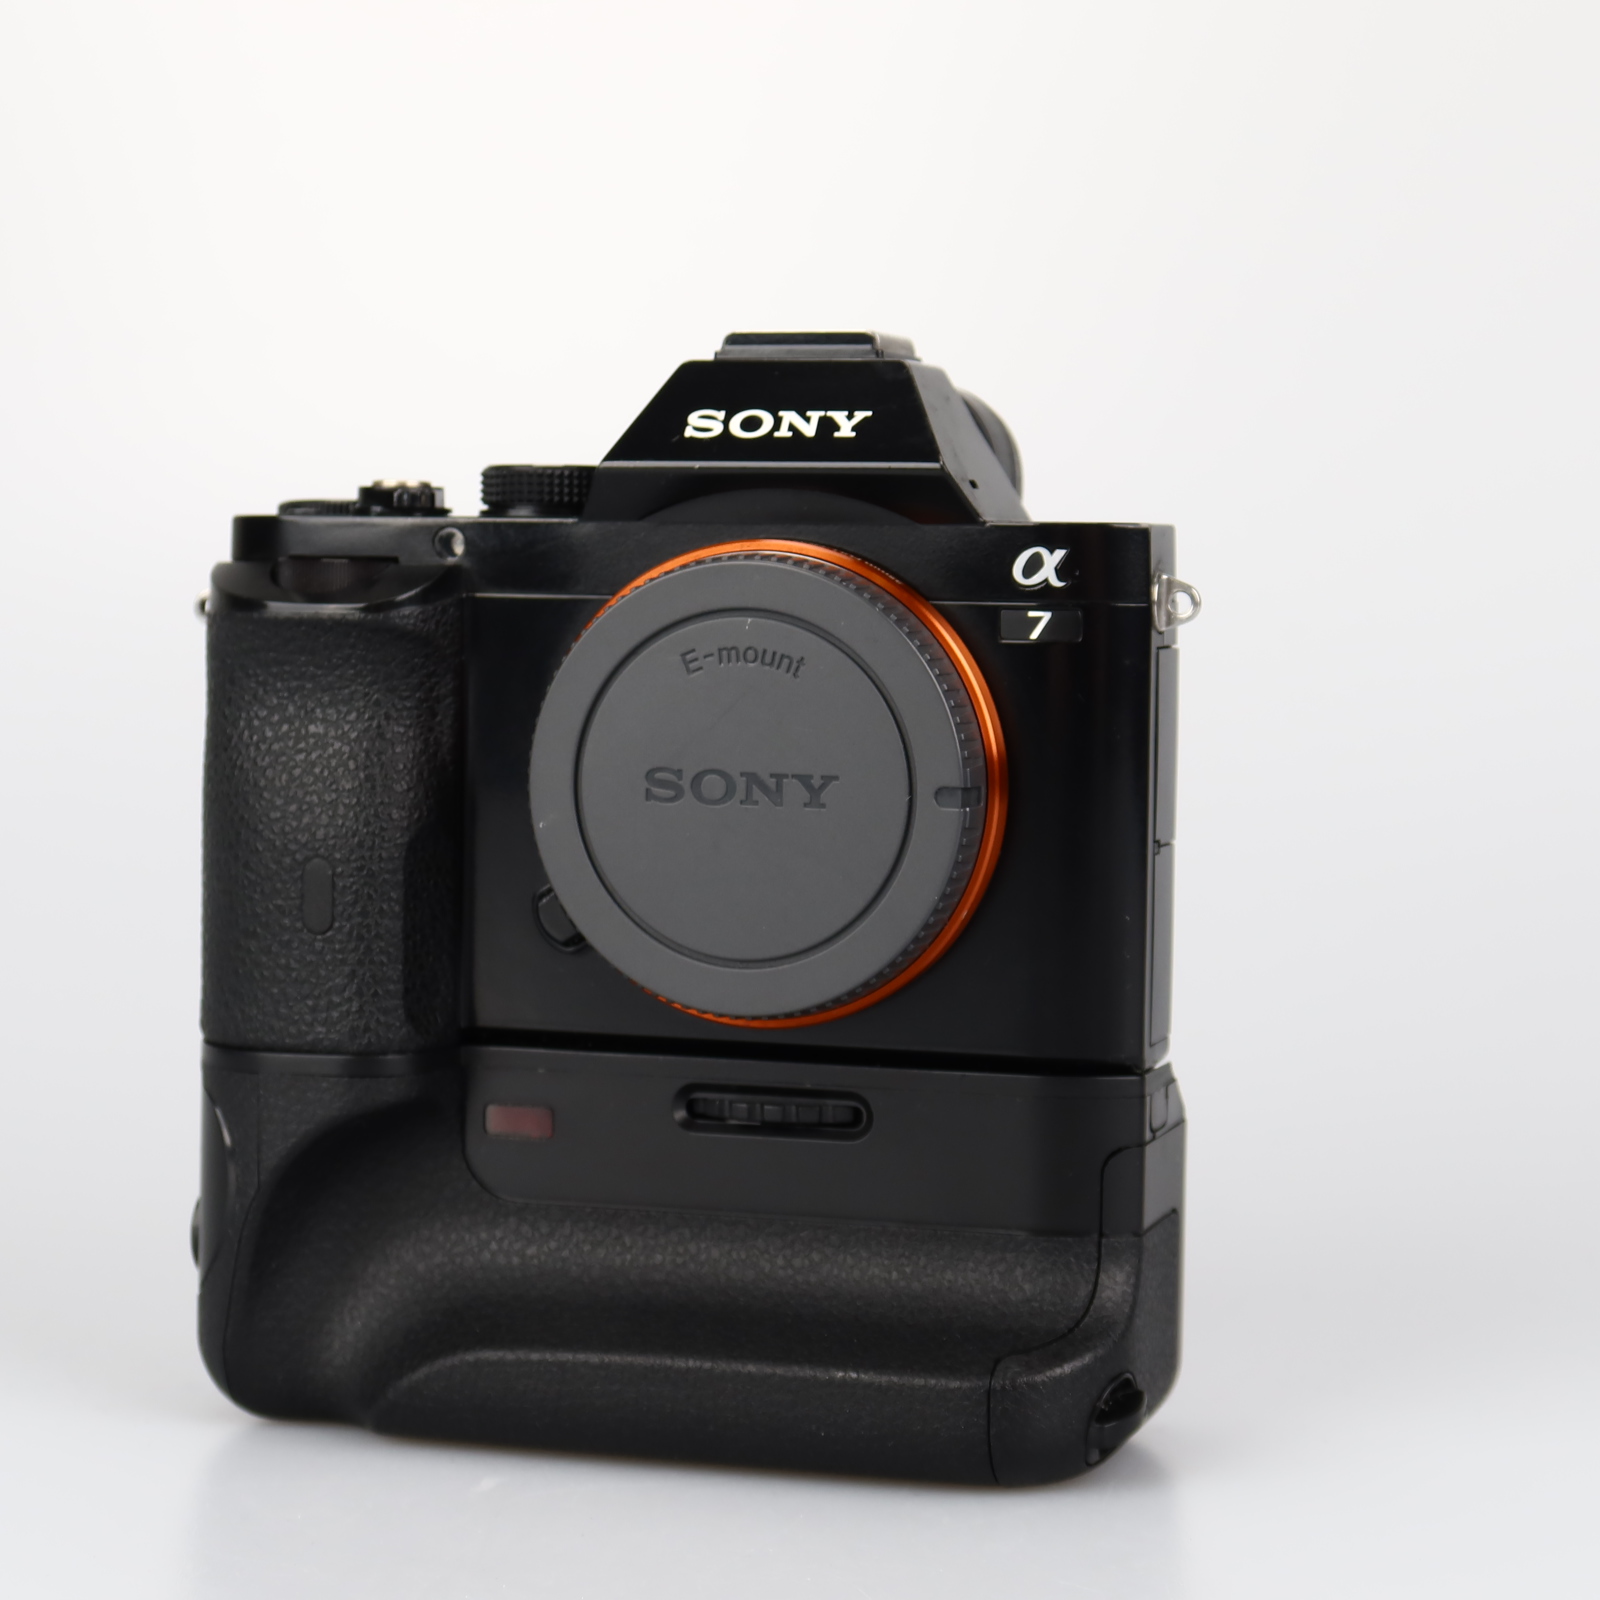 (Myyty) Sony A7 -runko (SC: 25050) + akkukahva (Käytetty)